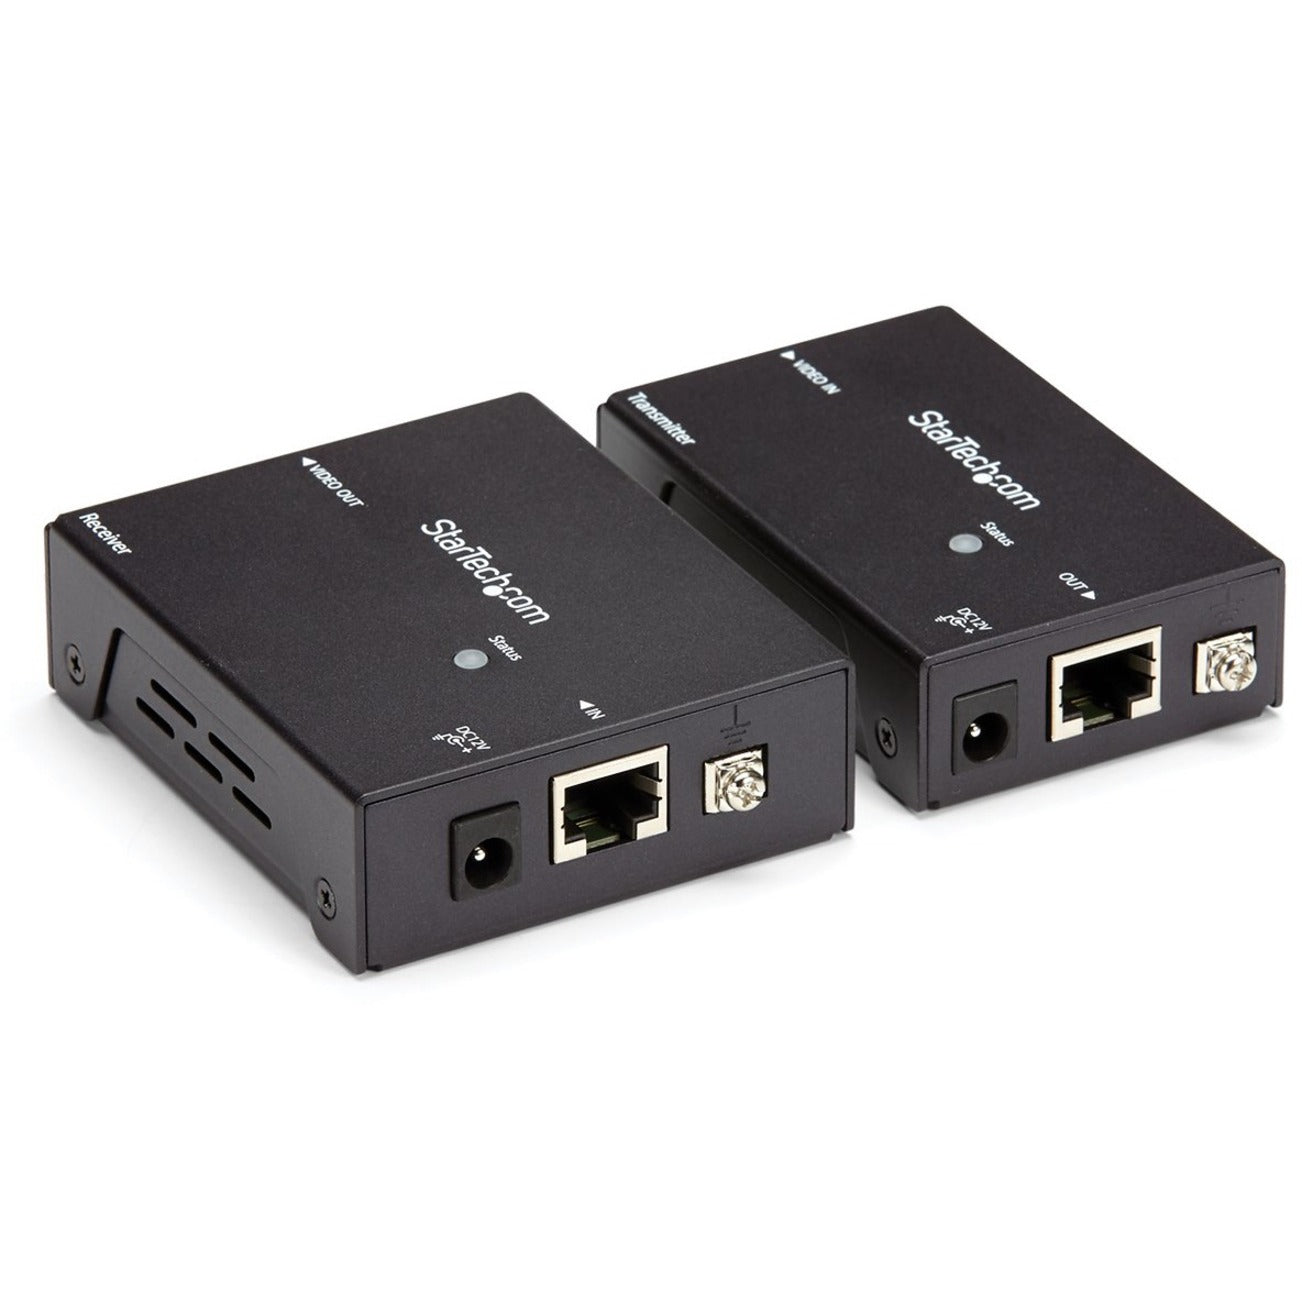 StarTech.com ST121HDBTE HDMI over CAT5 HDBaseT Extender - Power over Cable - Ultra HD 4K, 230 ft (70m) Range